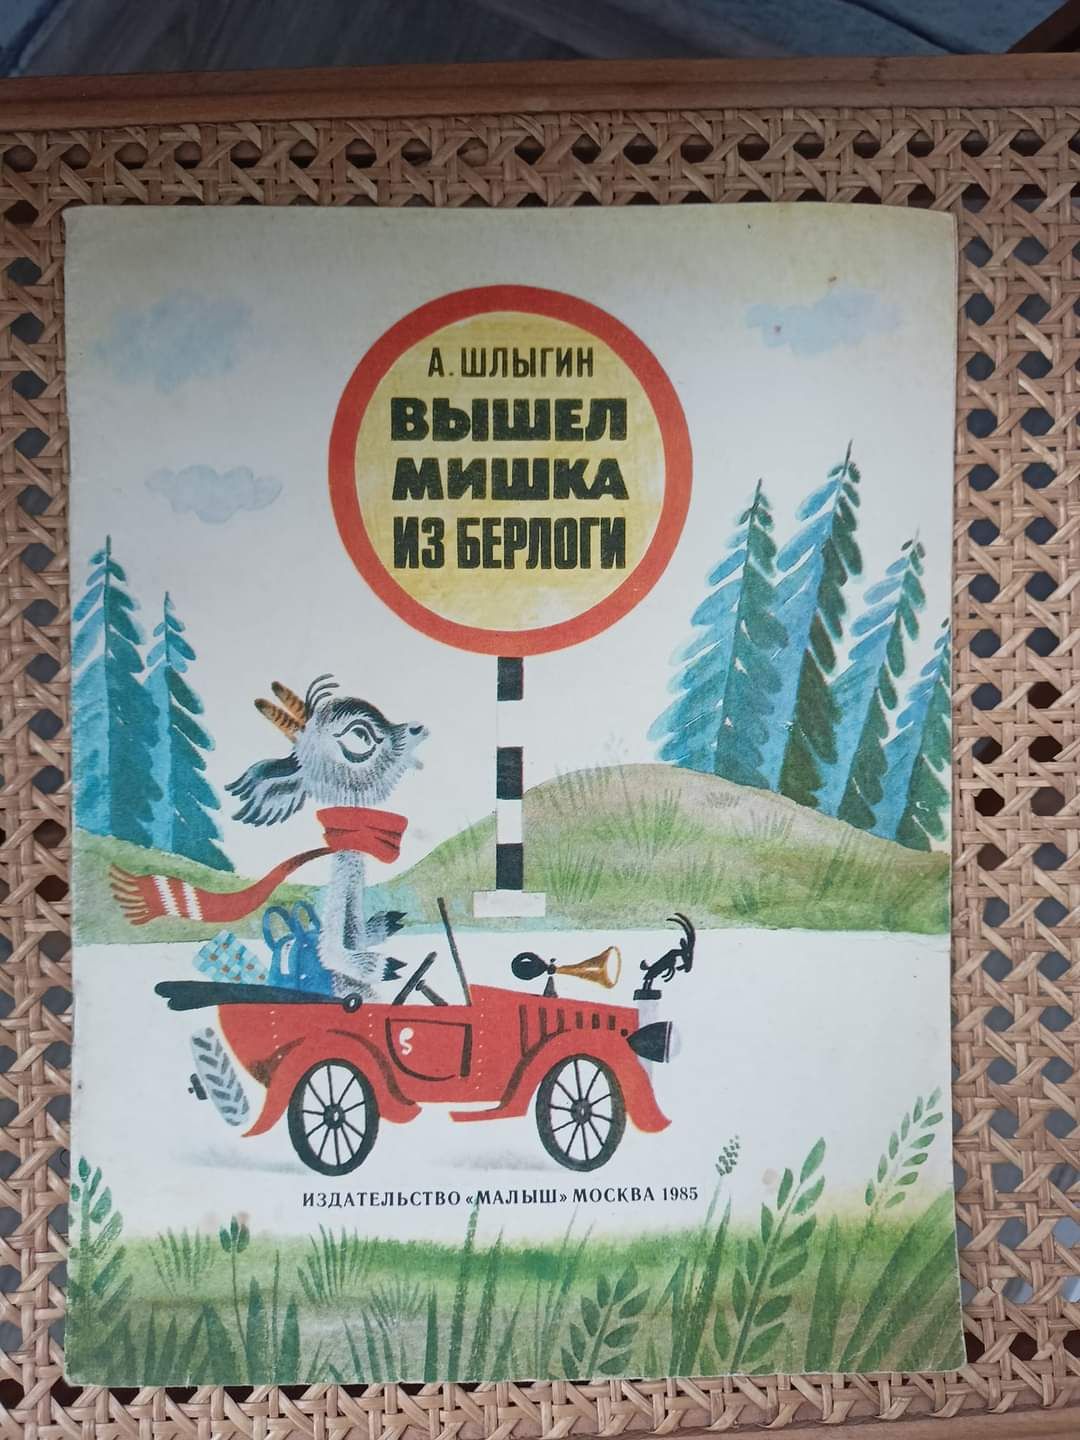 А.Шлыгин "Вышел мишка из берлоги", Малыш, 1985